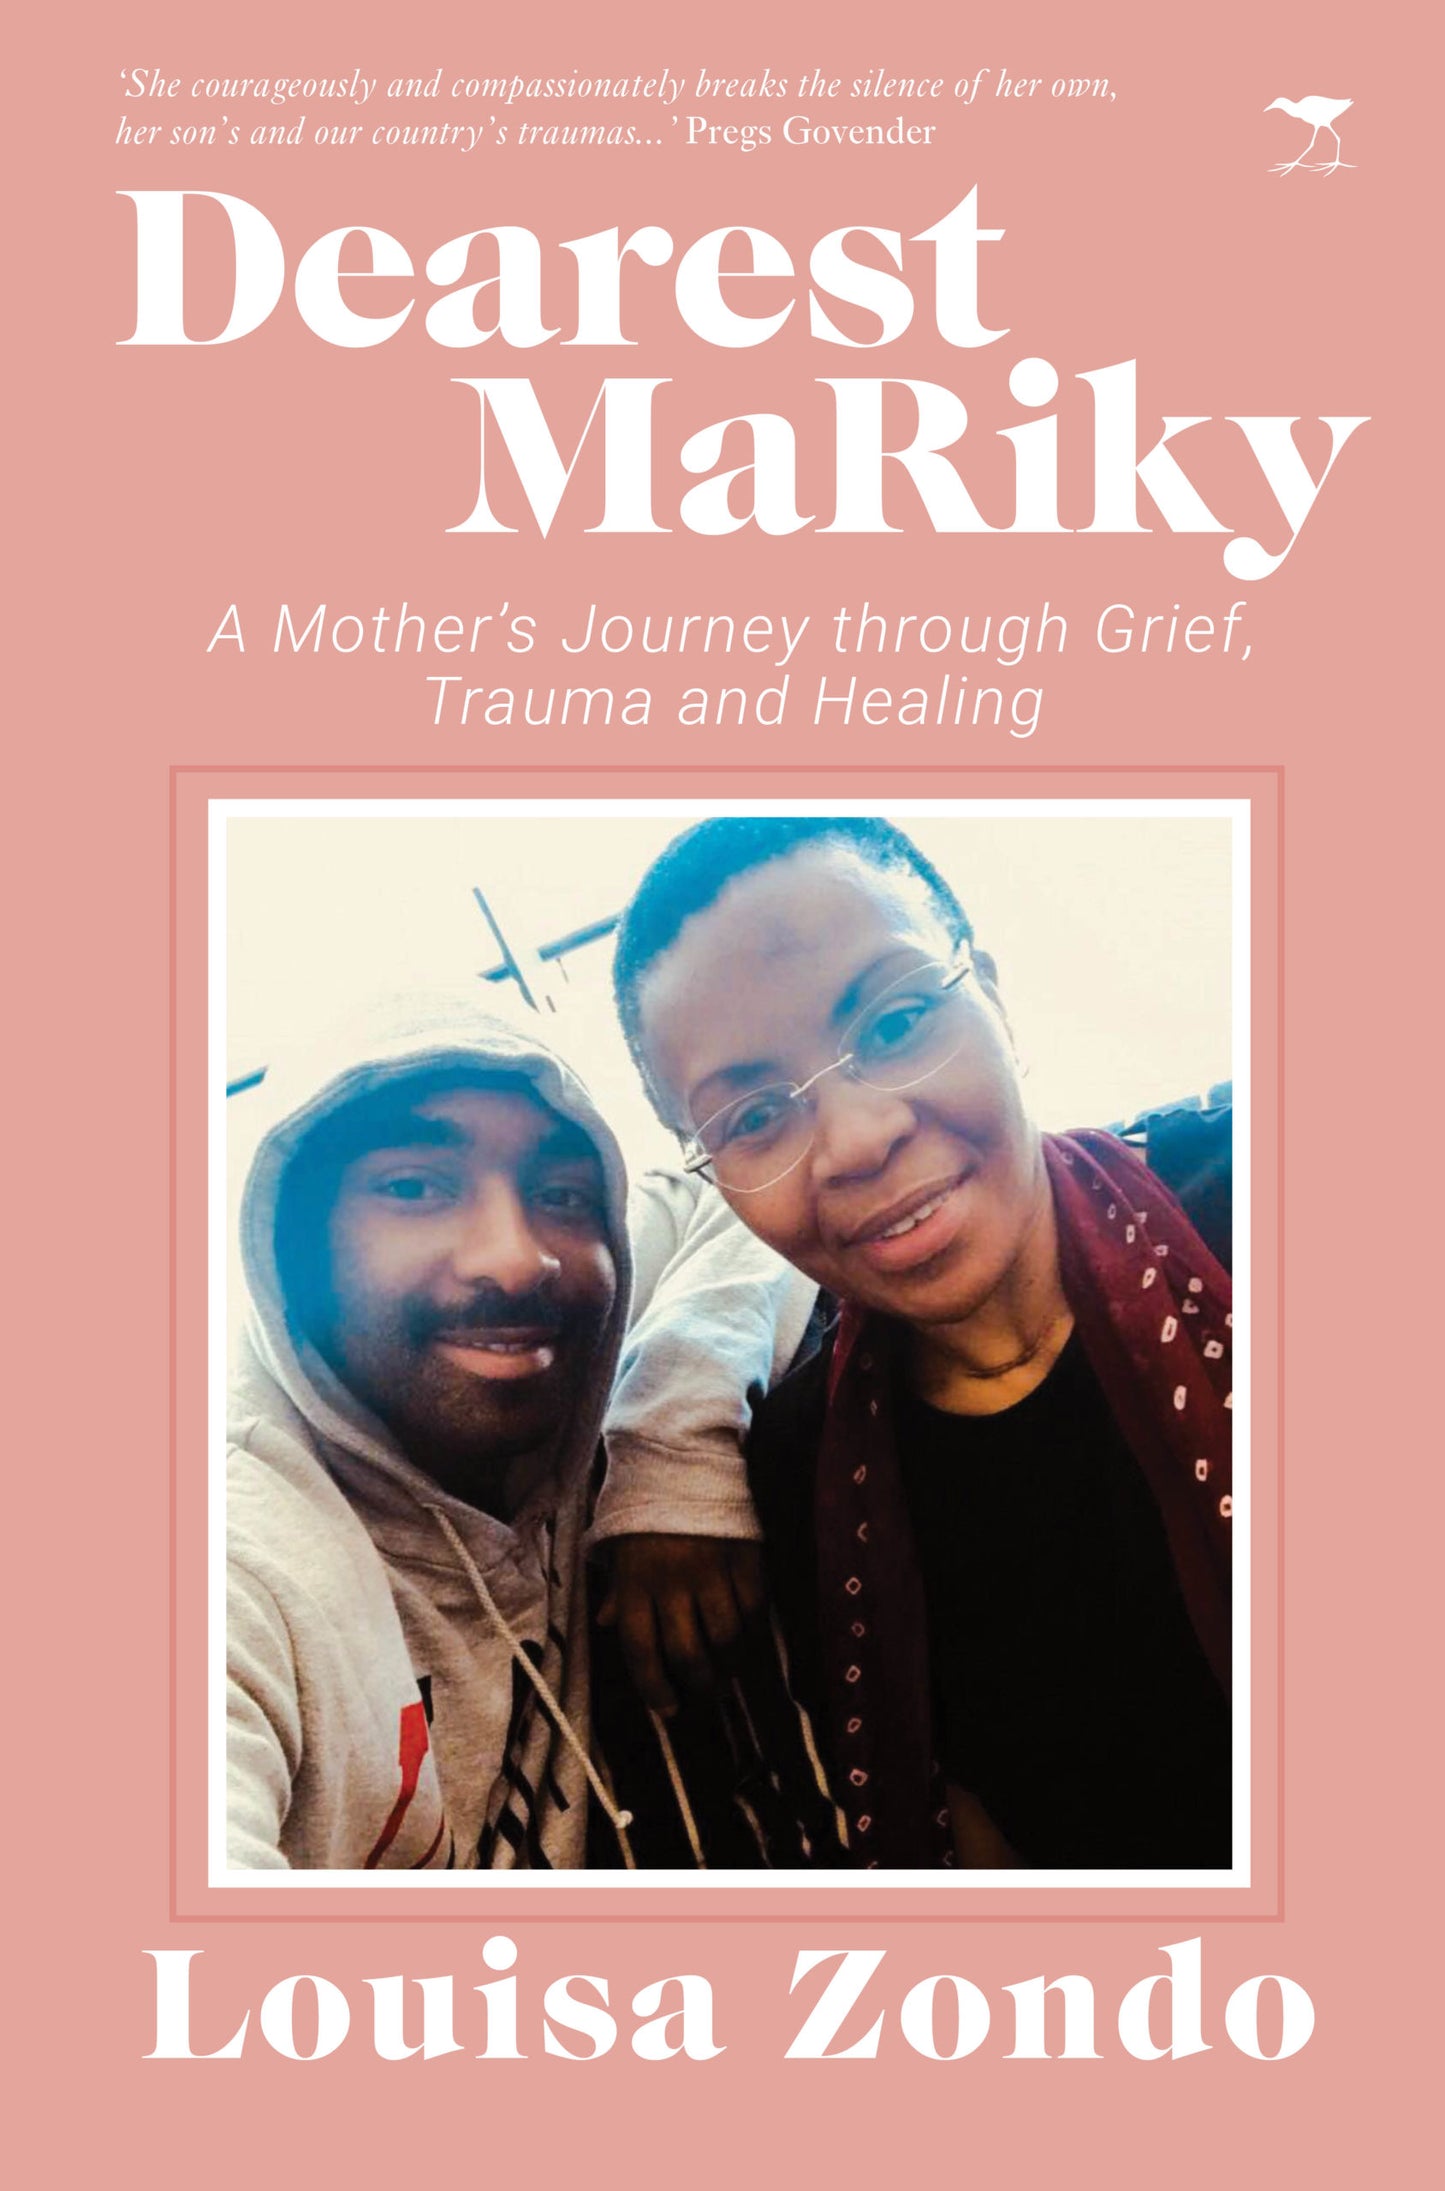 Dearest MaRiky: A Mother's Journey through Grief, Trauma and Healing, by Louisa Zondo